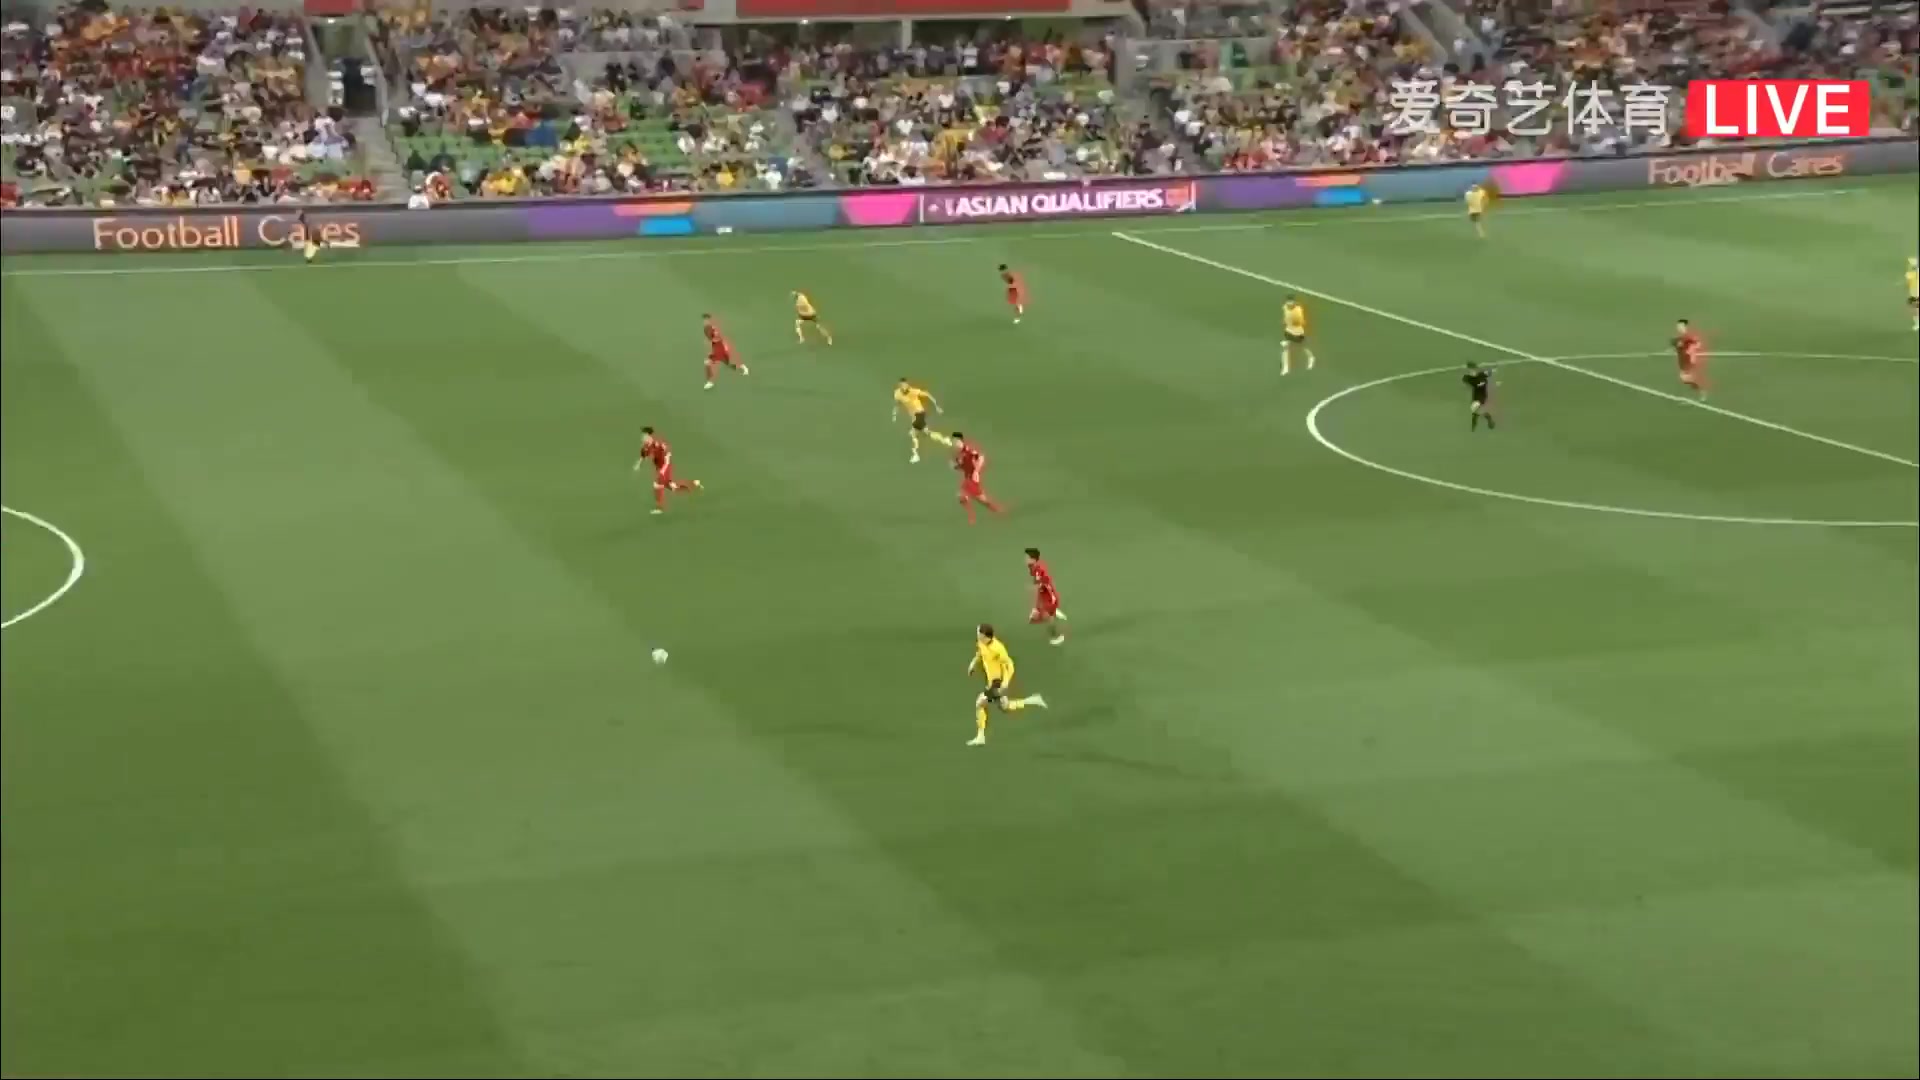 FIFA WCQL Australia Vs Vietnam Craig Goodwin Goal in 72 min, Score 3:0